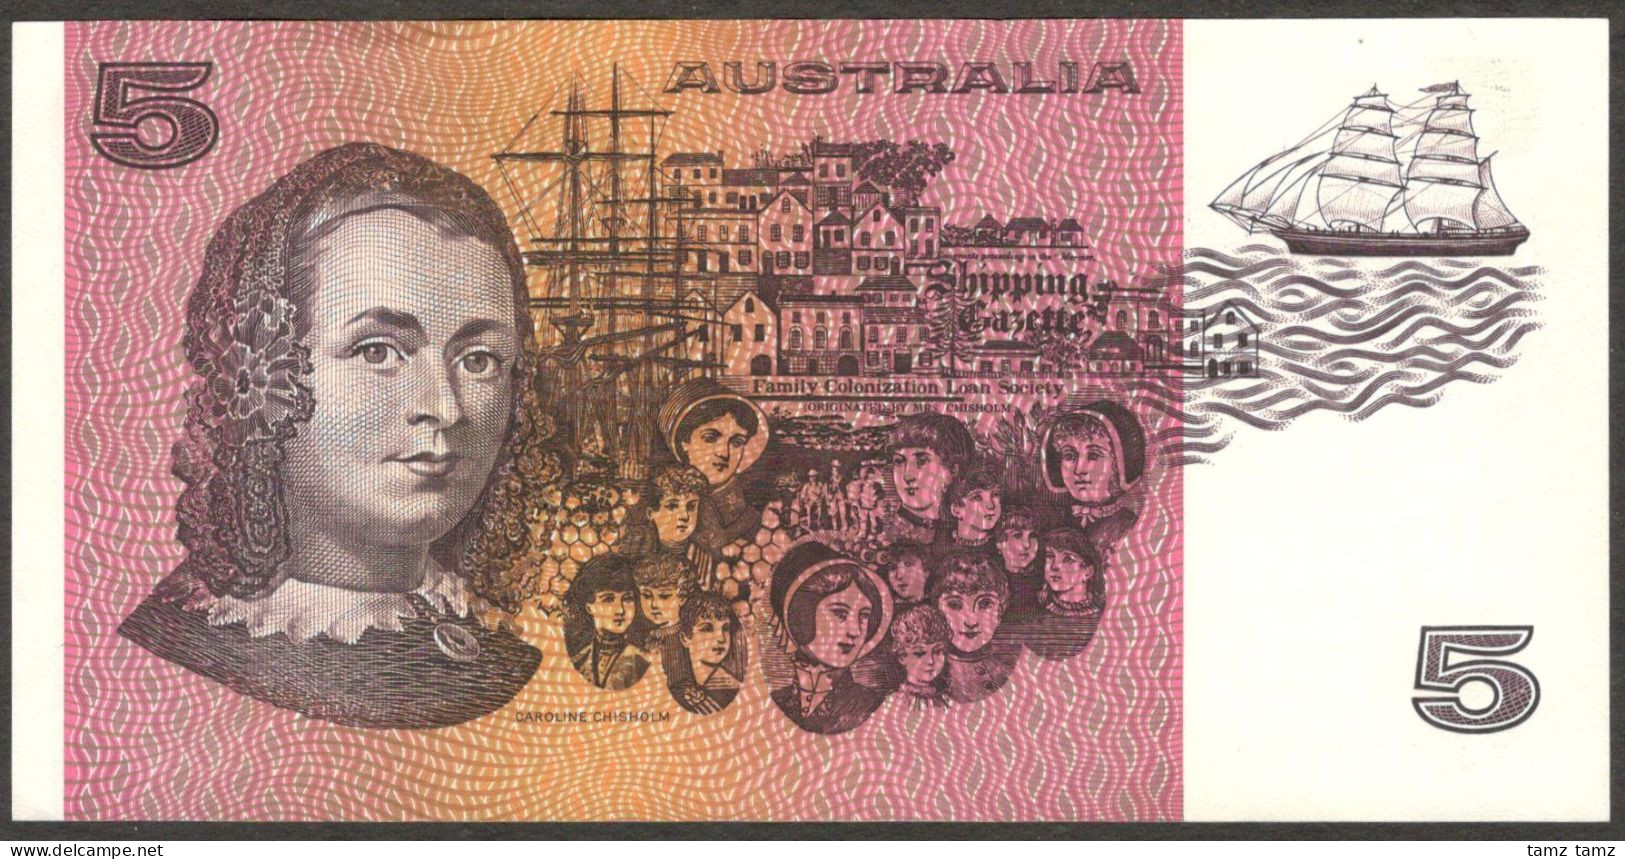 Australia 5 Dollars Fraser Higgins 1974 1991 AUNC - Nationalbank Ausgaben 1910